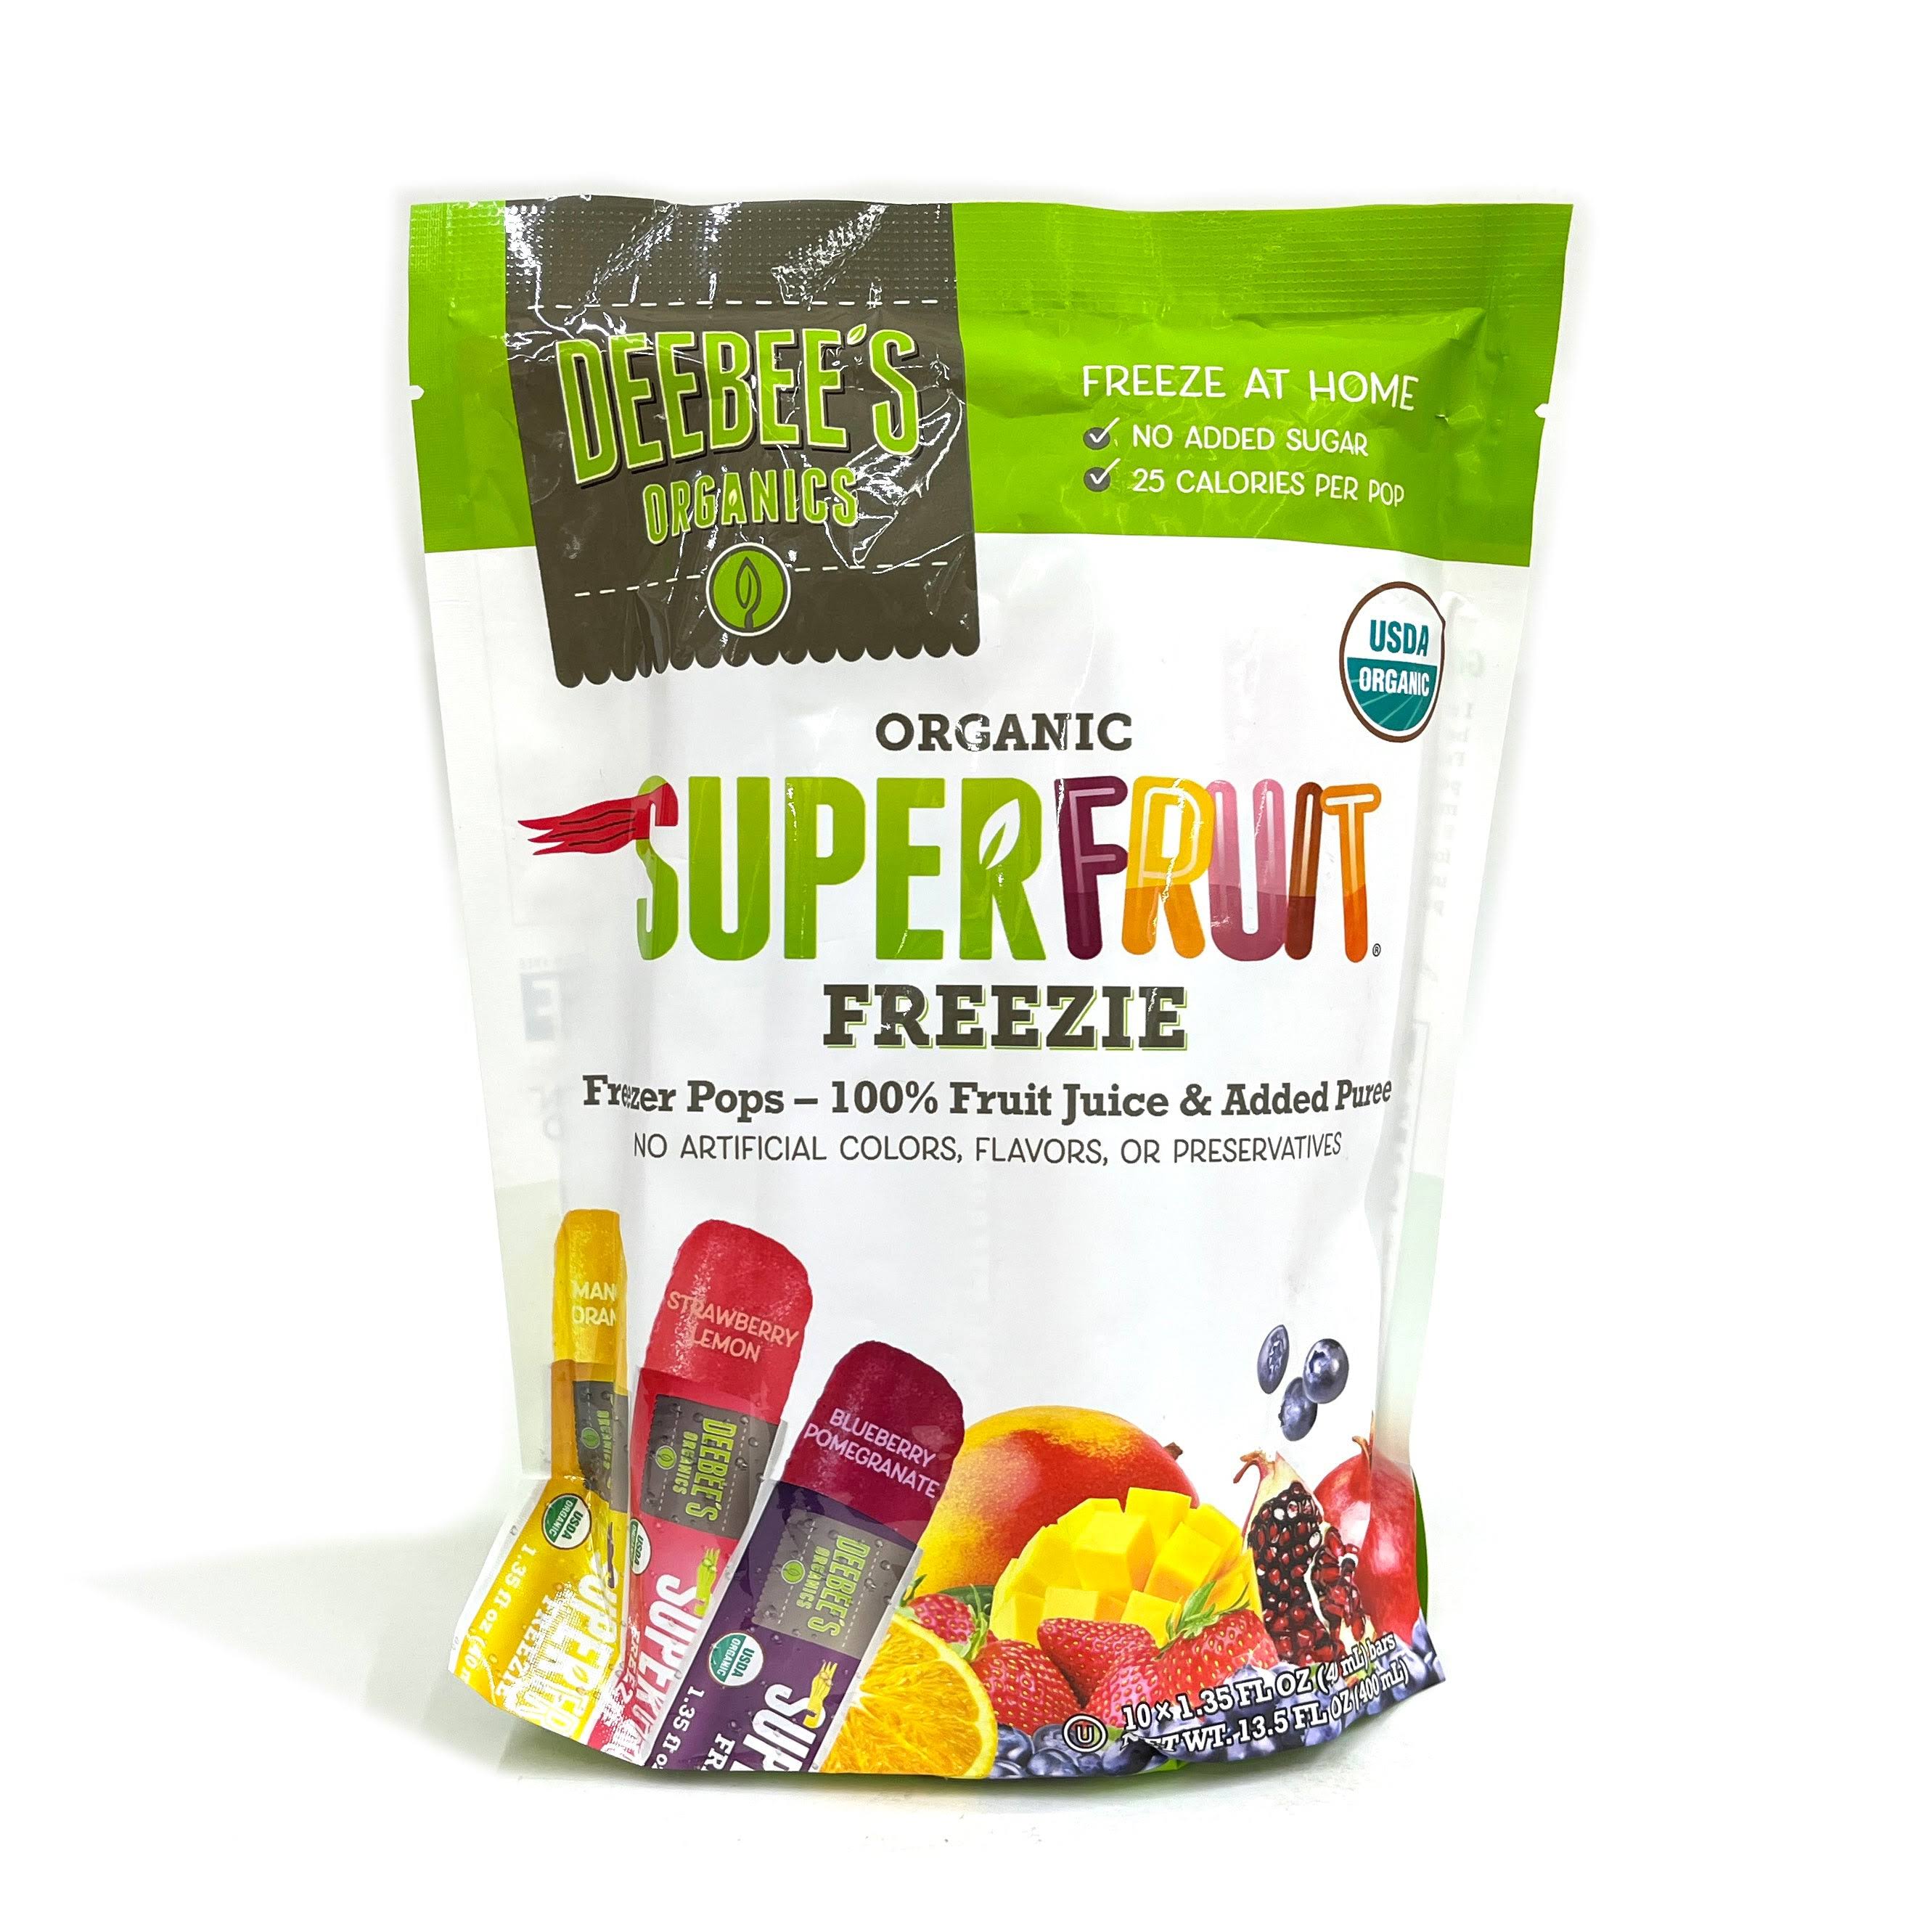 Deebee's Organic Superfruit Freezie Assorted Flavors 10 Bars 1.35 fl oz (40 ml) Each